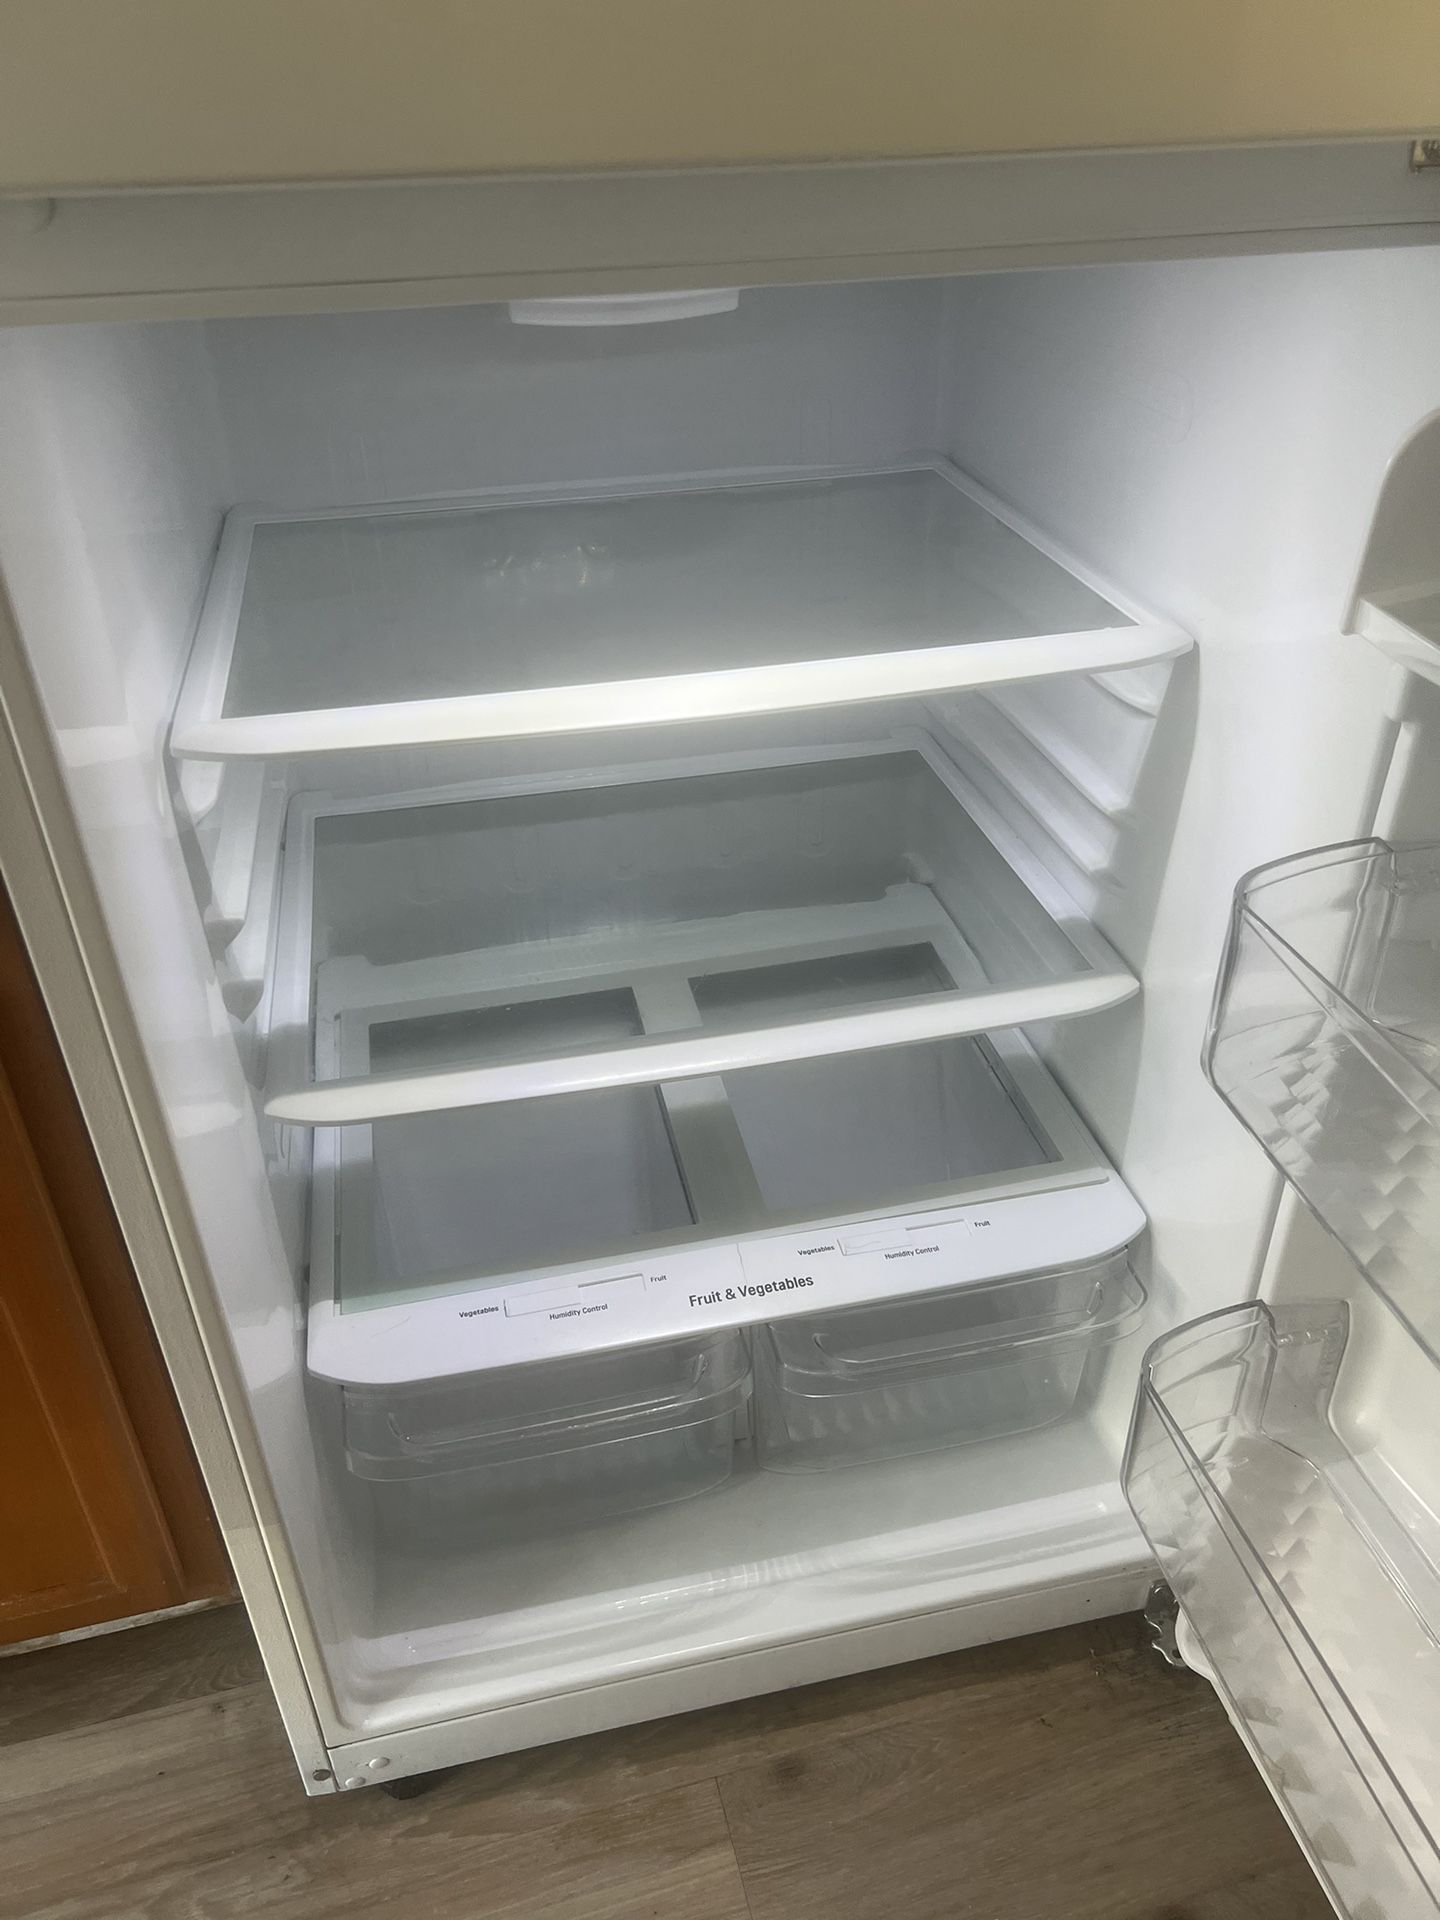 LG 2022 refrigerator - 400 obo